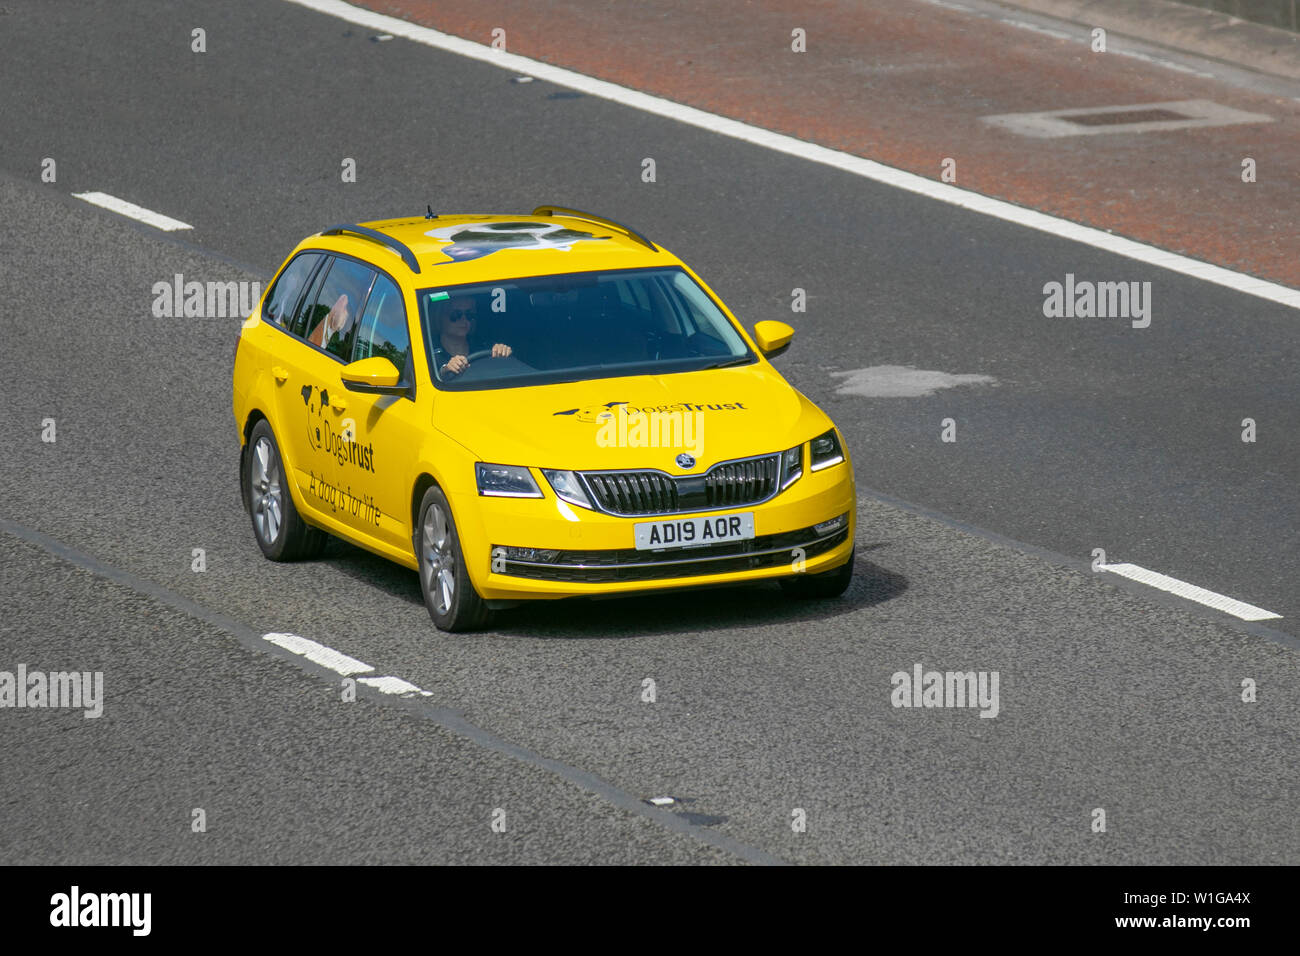 2019 yellow Škoda Octavia SE L TDI 4X4 S-A; M6, Lancaster, UK; Vehicular traffic, transport, modern, saloon cars, north-bound on the 3 lane highway. Stock Photo